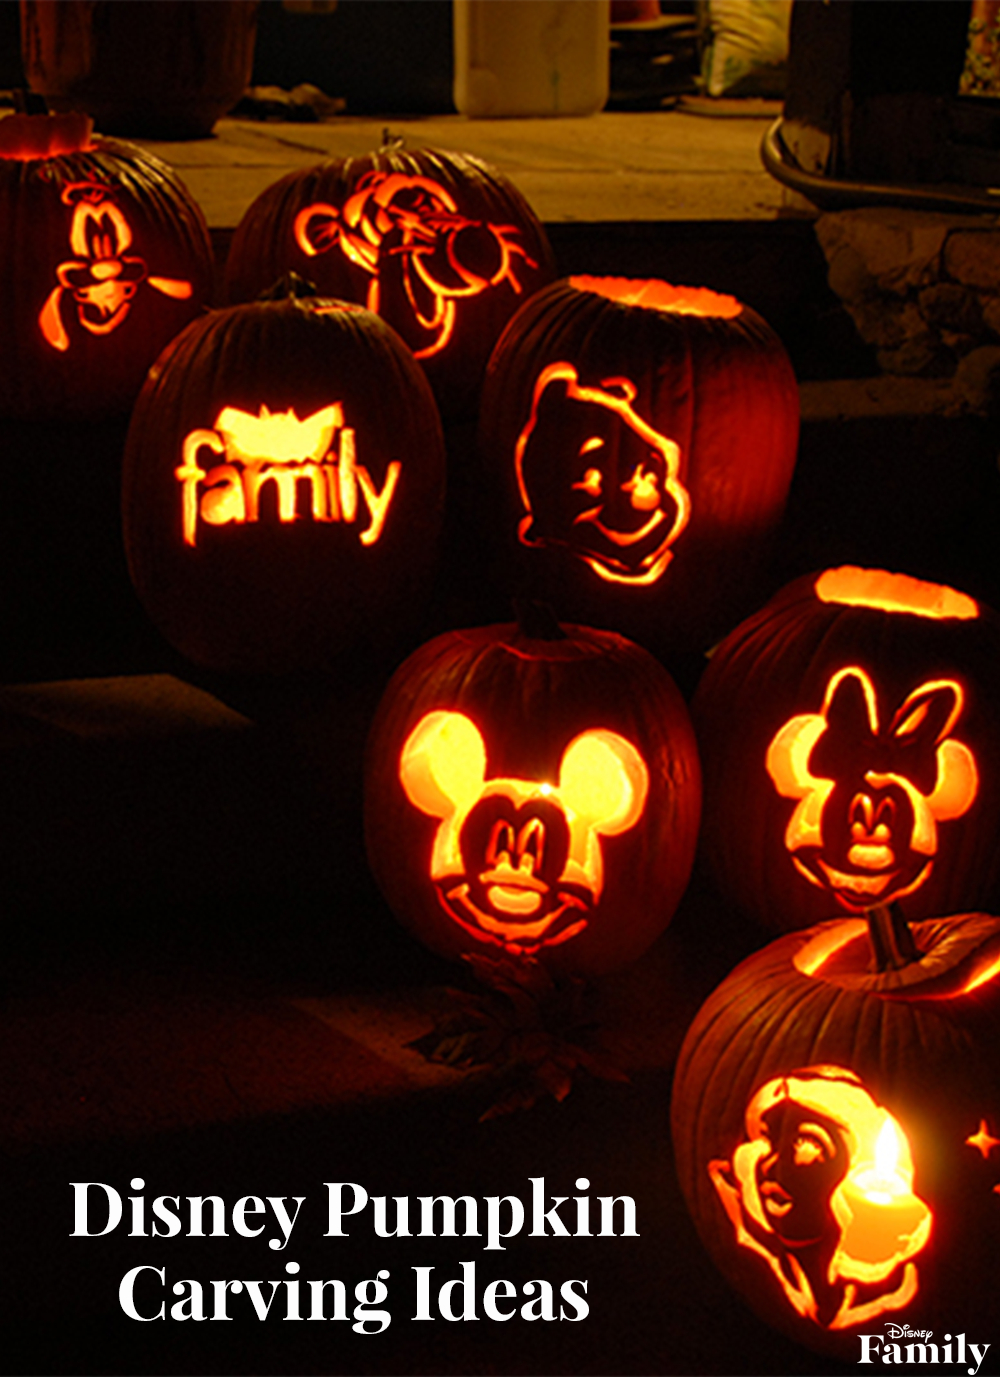 Disney Pumpkin Carving Ideas | Disney Family - Free Online Pumpkin Carving Patterns Printable